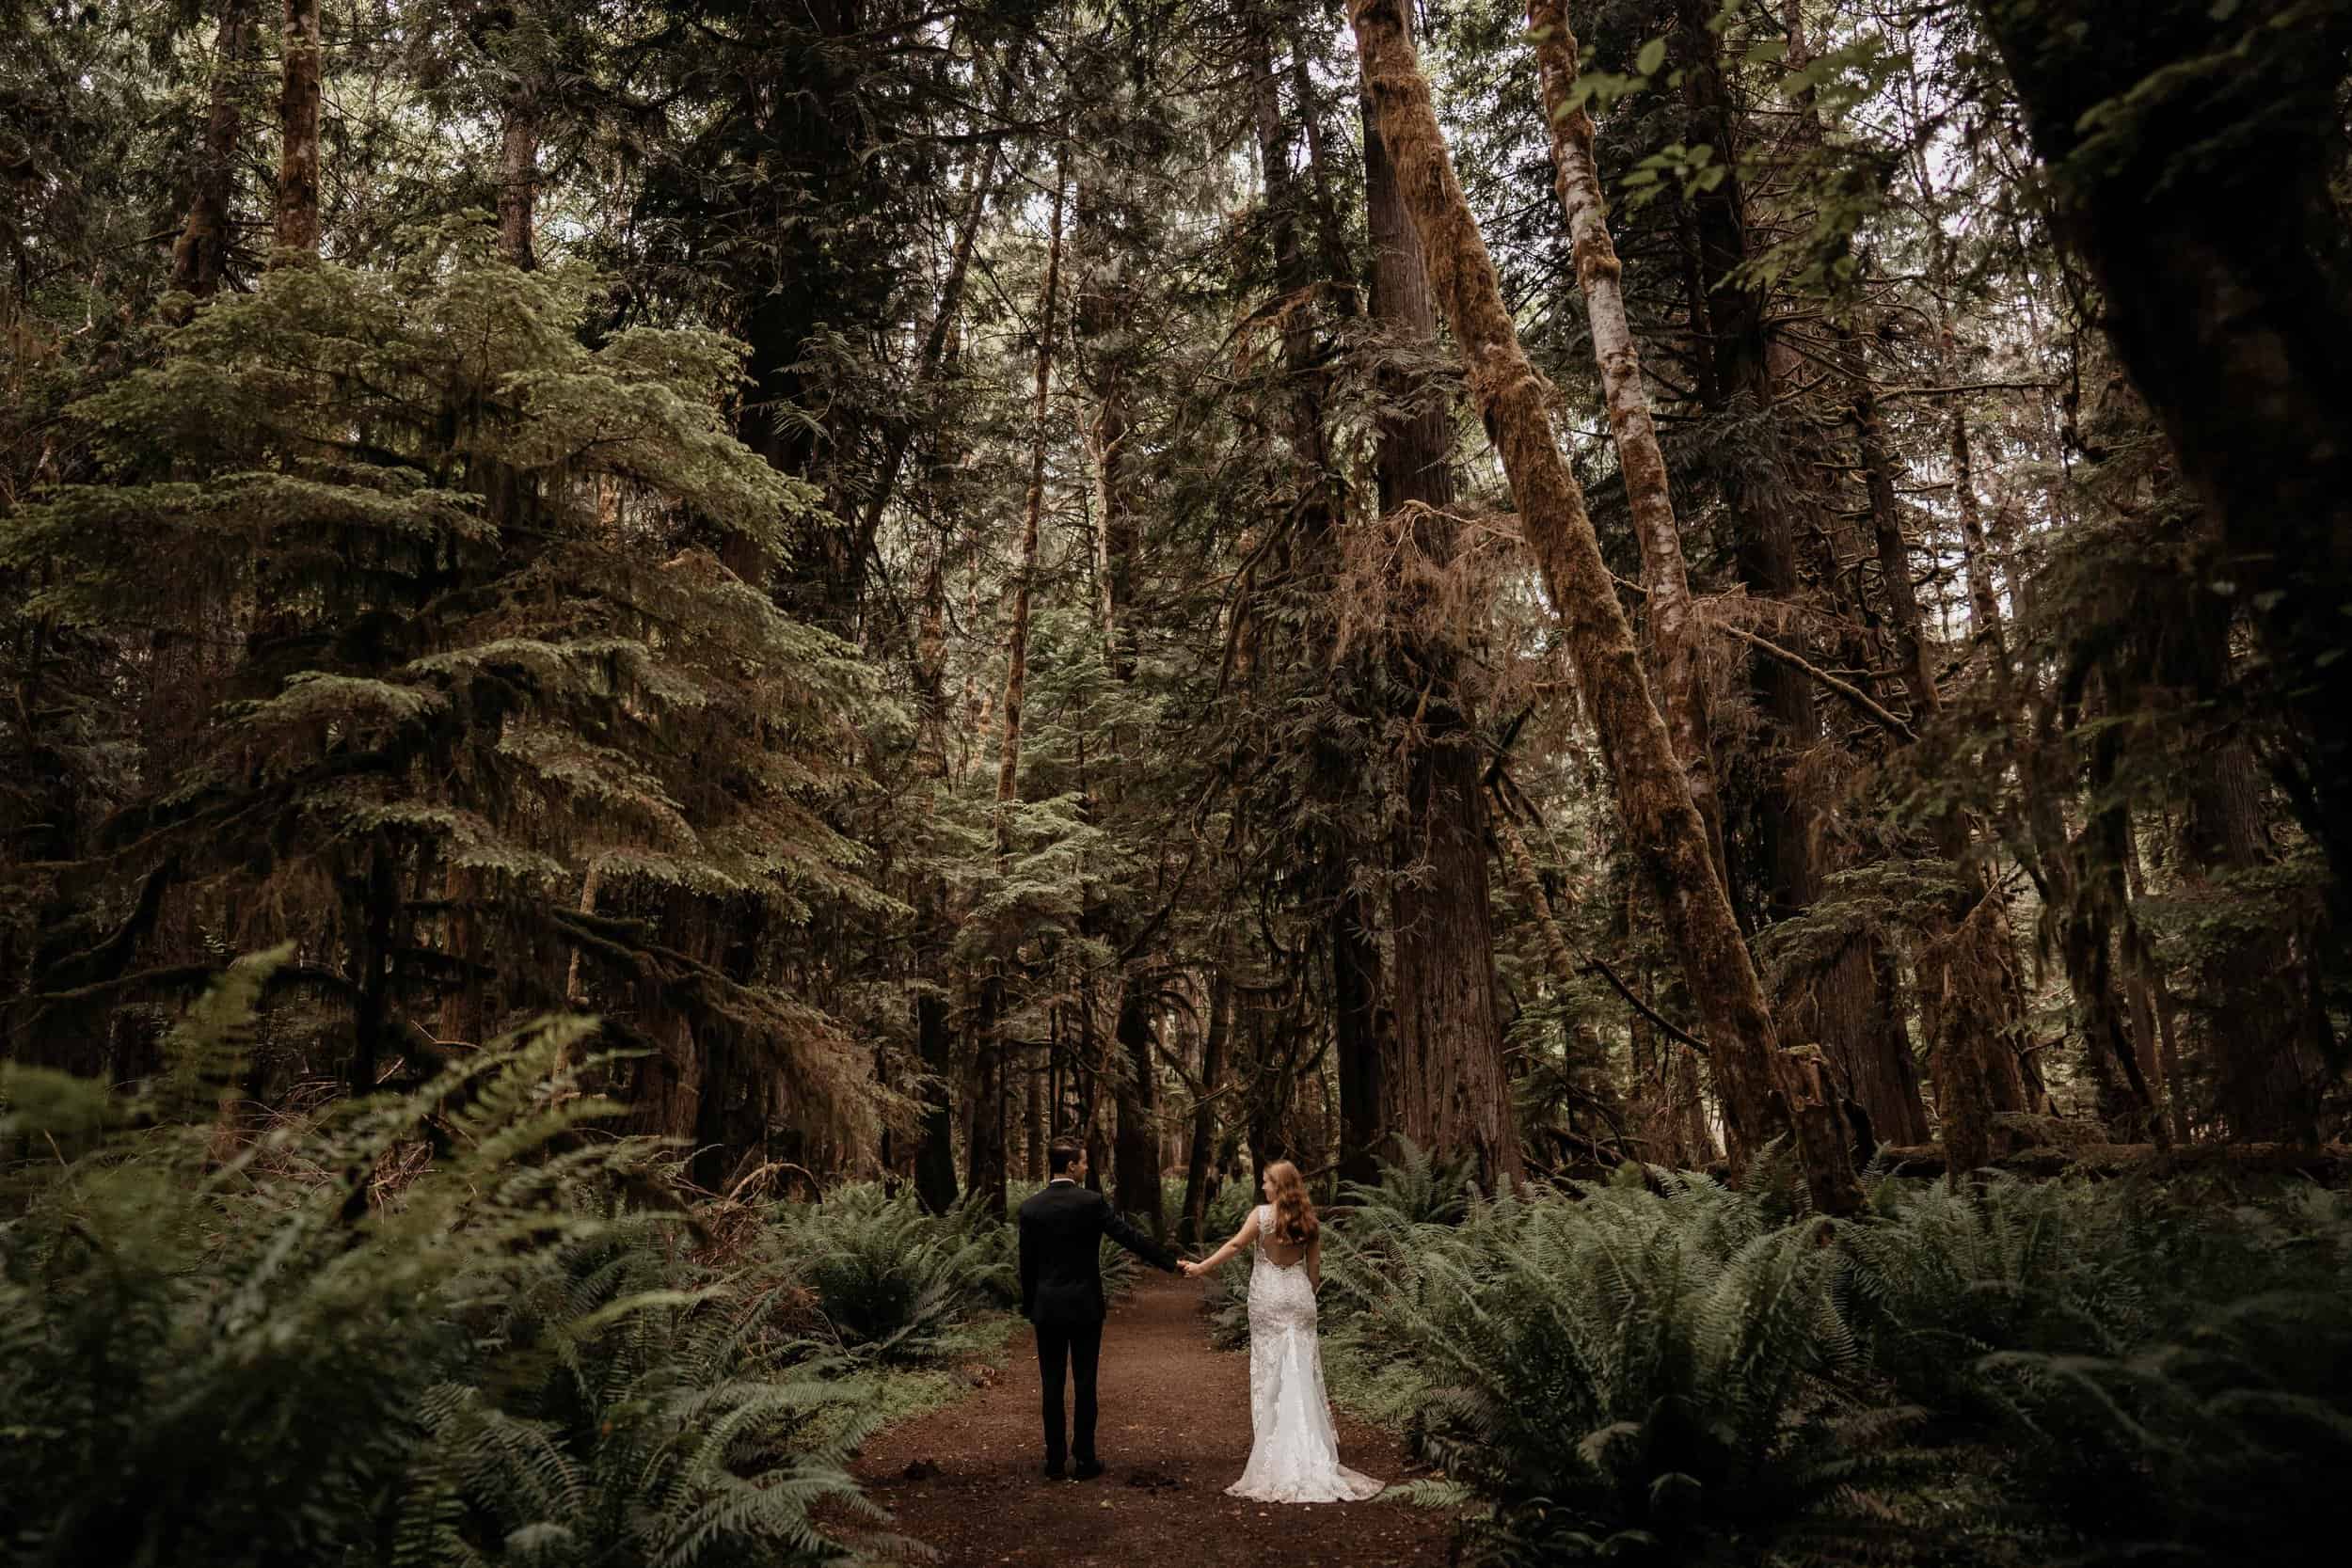 Why choose a forest wedding venue?